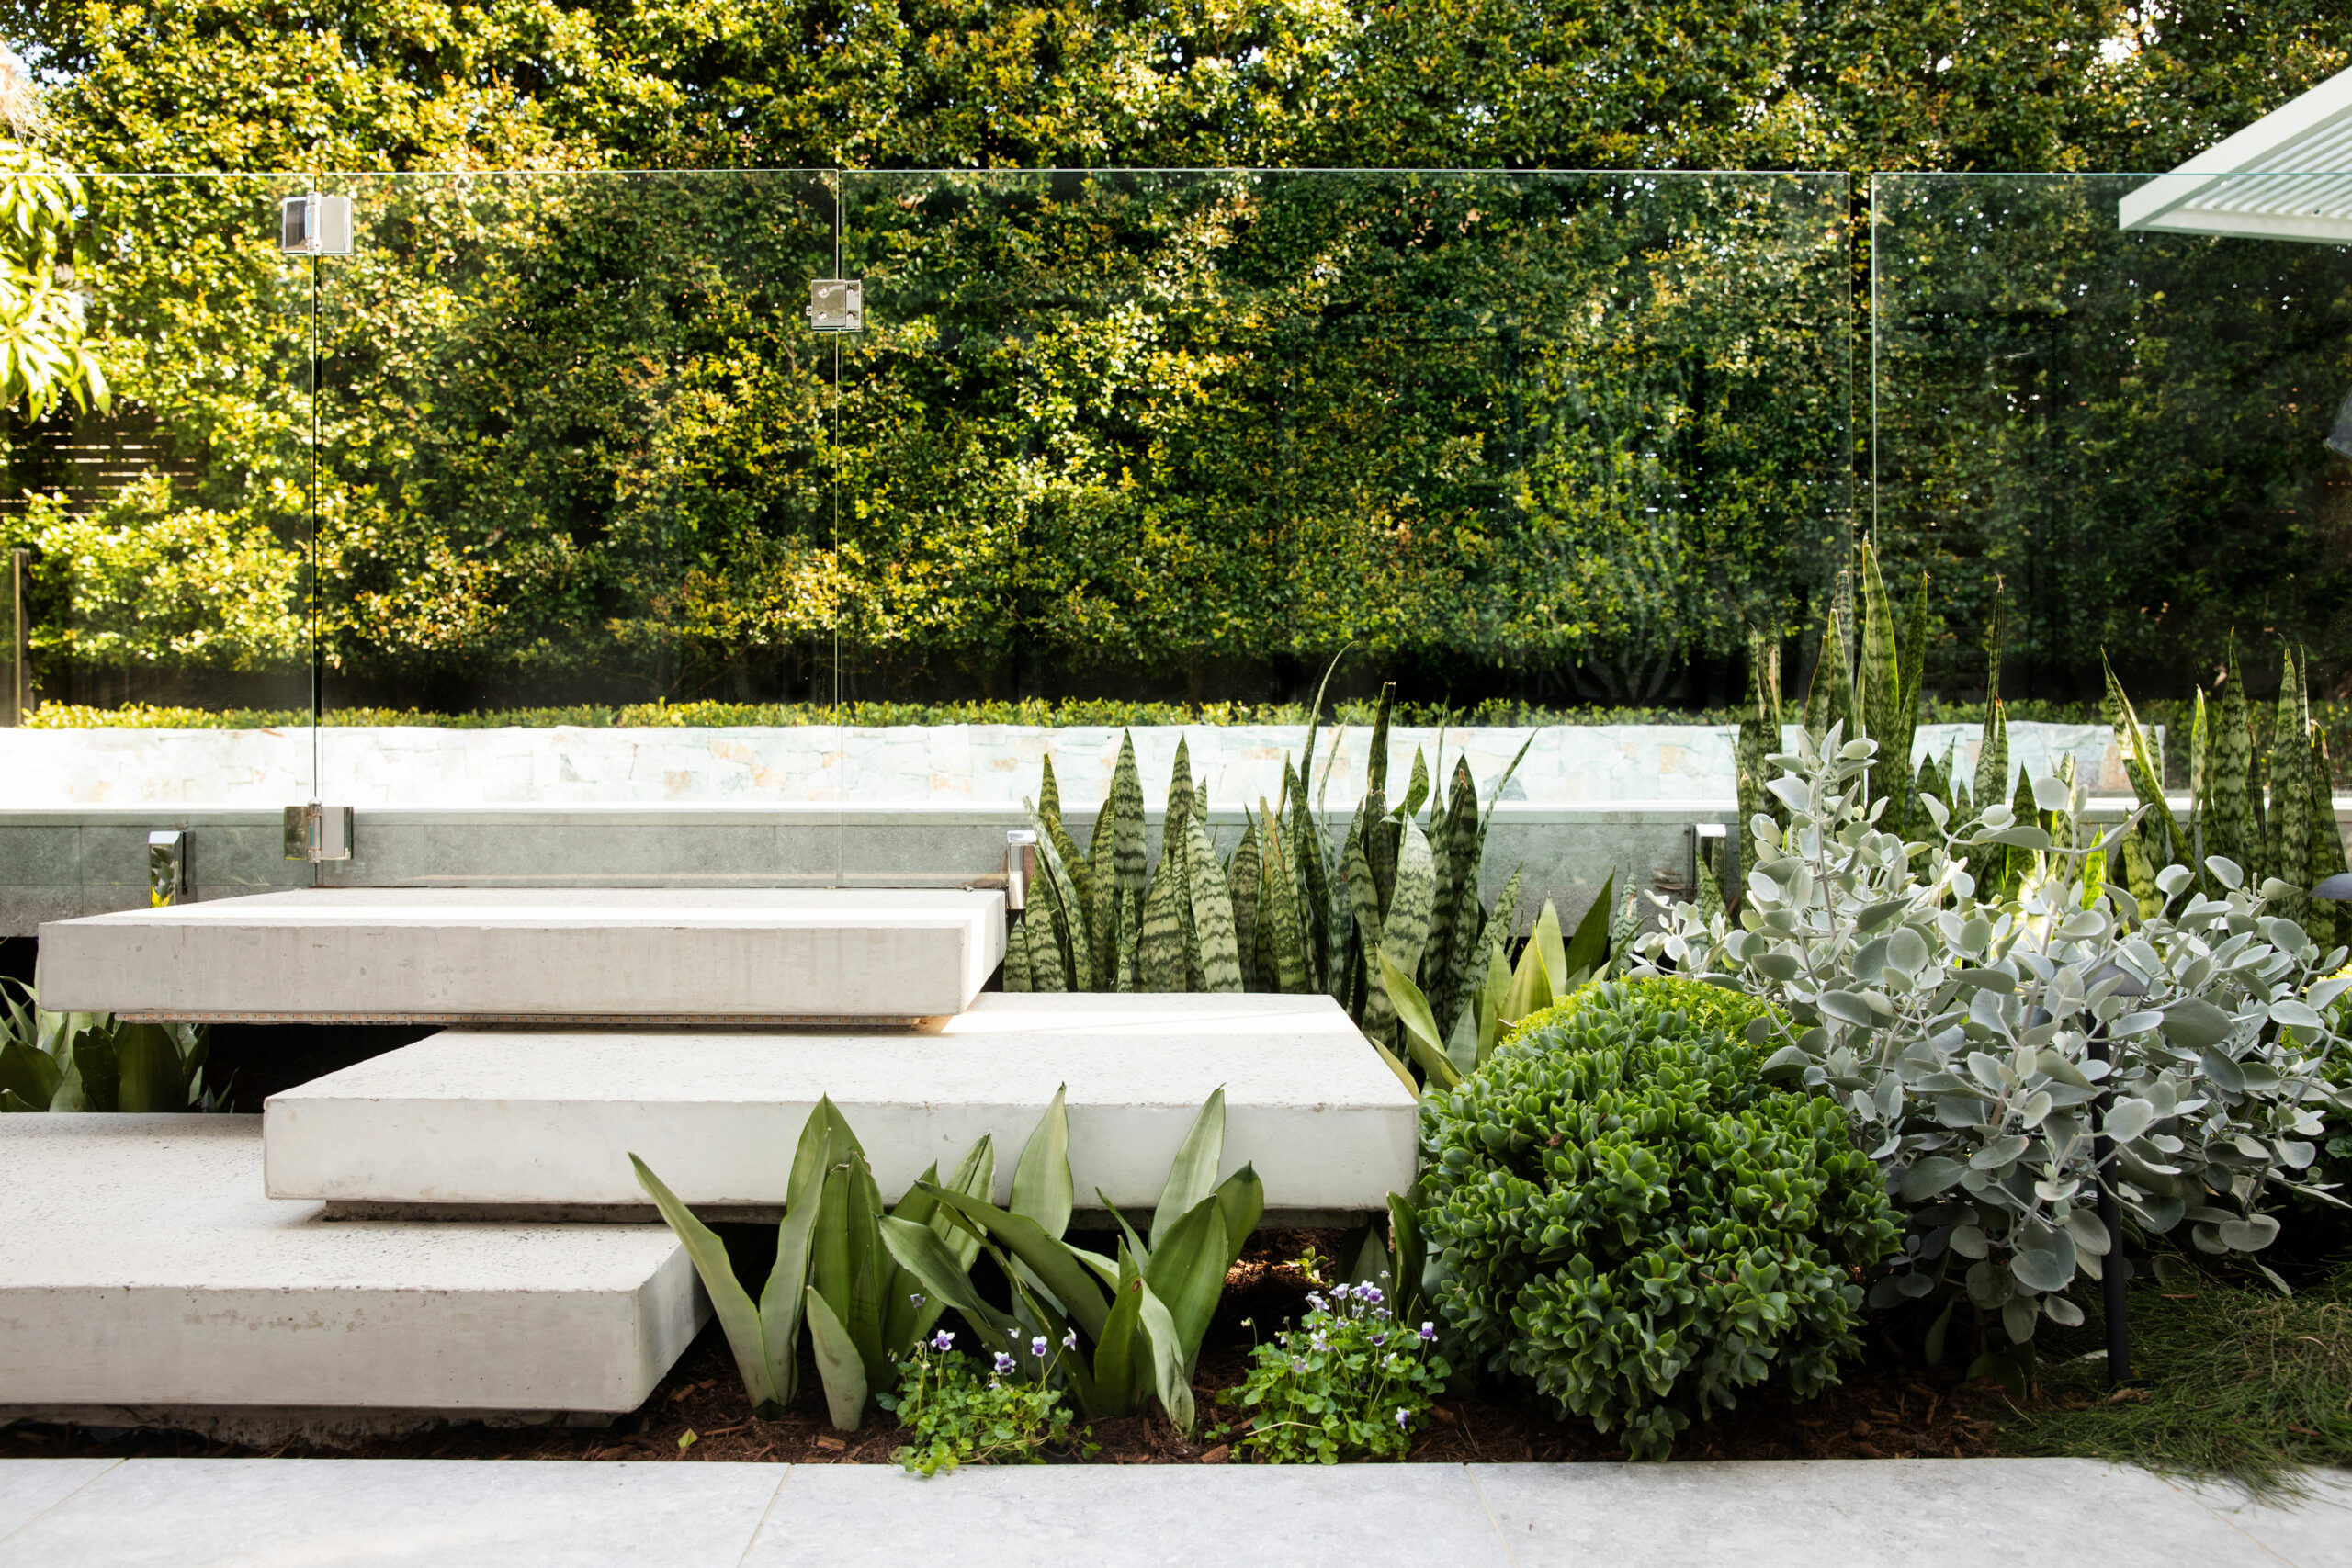 Maroubra Secluded Gem - floating concrete steps - glass pool fence - native planting - hedge